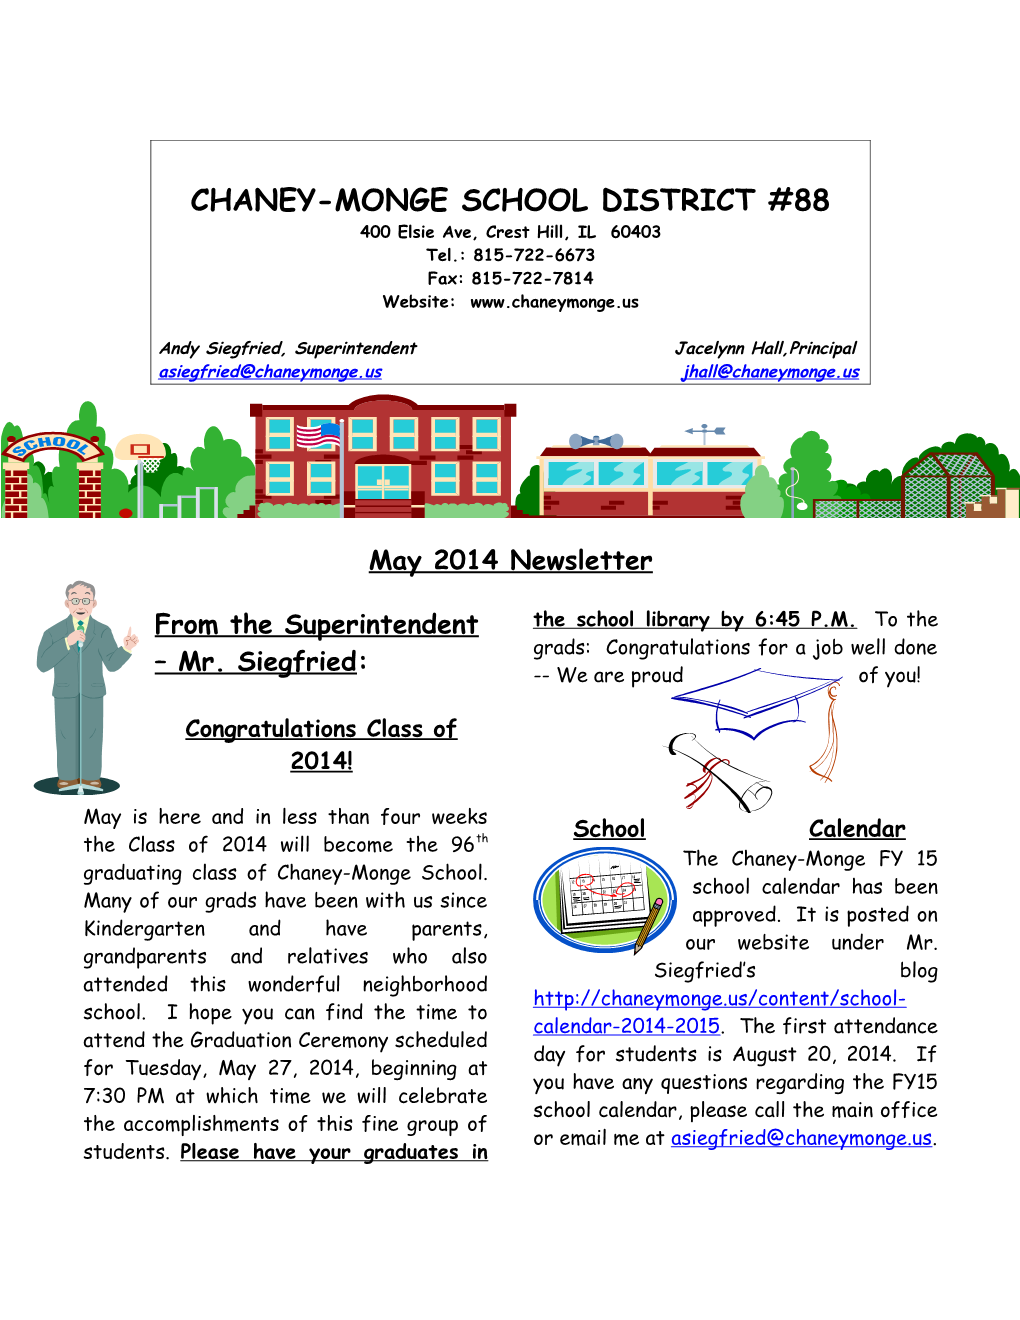 Chaney-Monge School District 88 s2